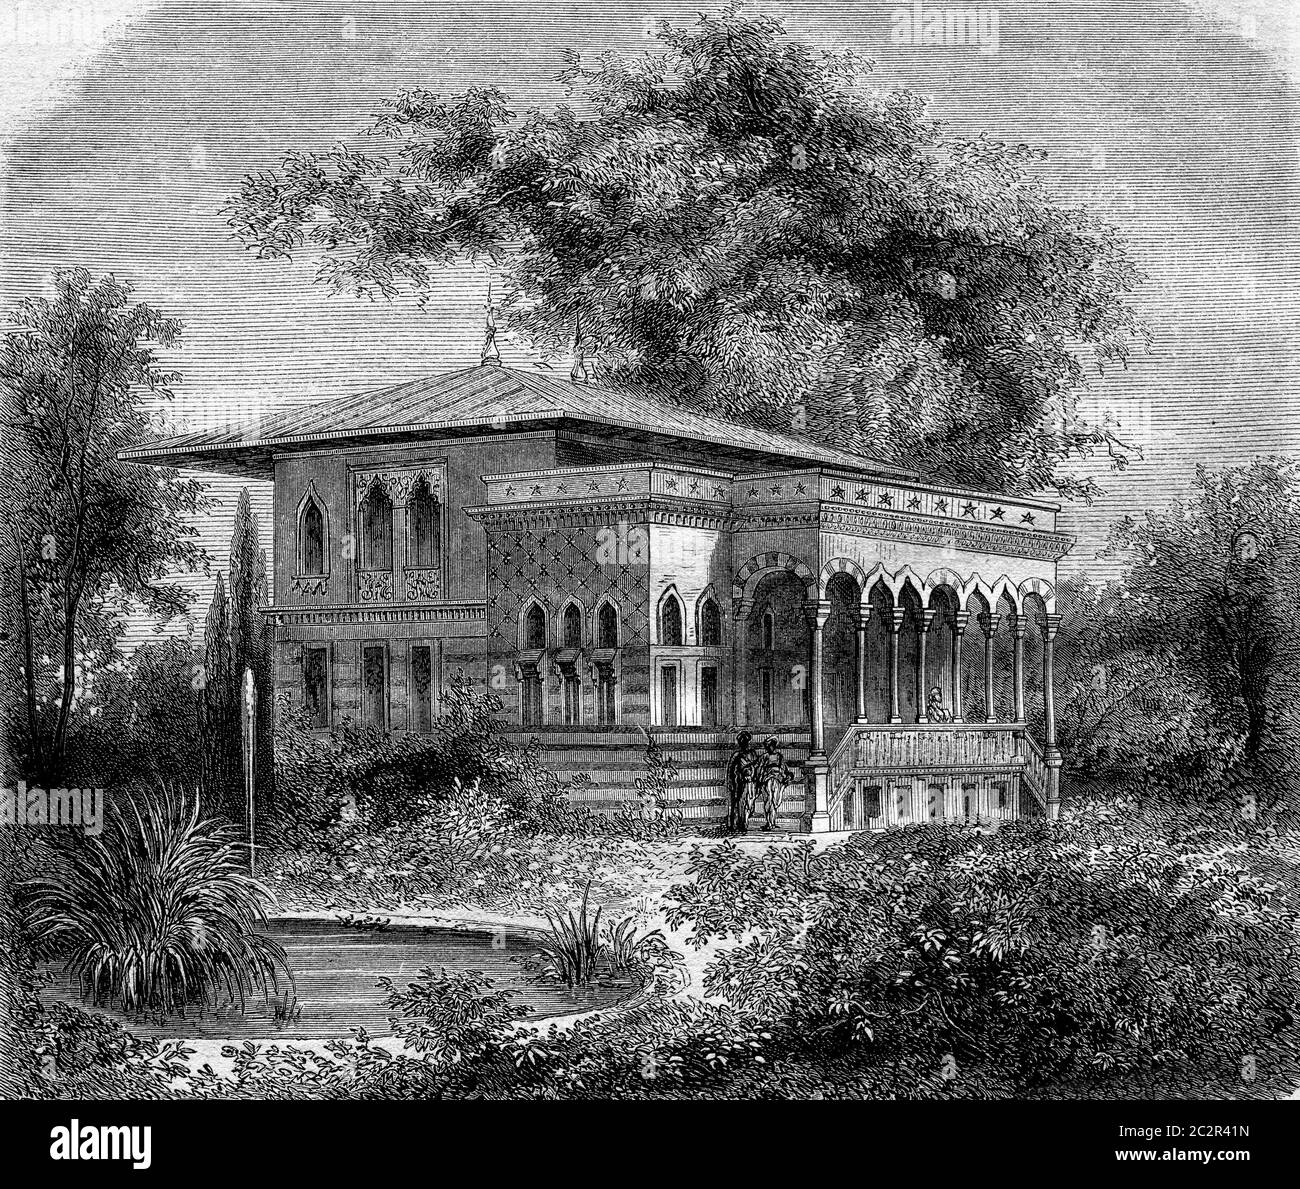 World Expo 1867, das Haus des Bosporus, Vintage gravierte Illustration. Magasin Pittoresque 1867. Stockfoto